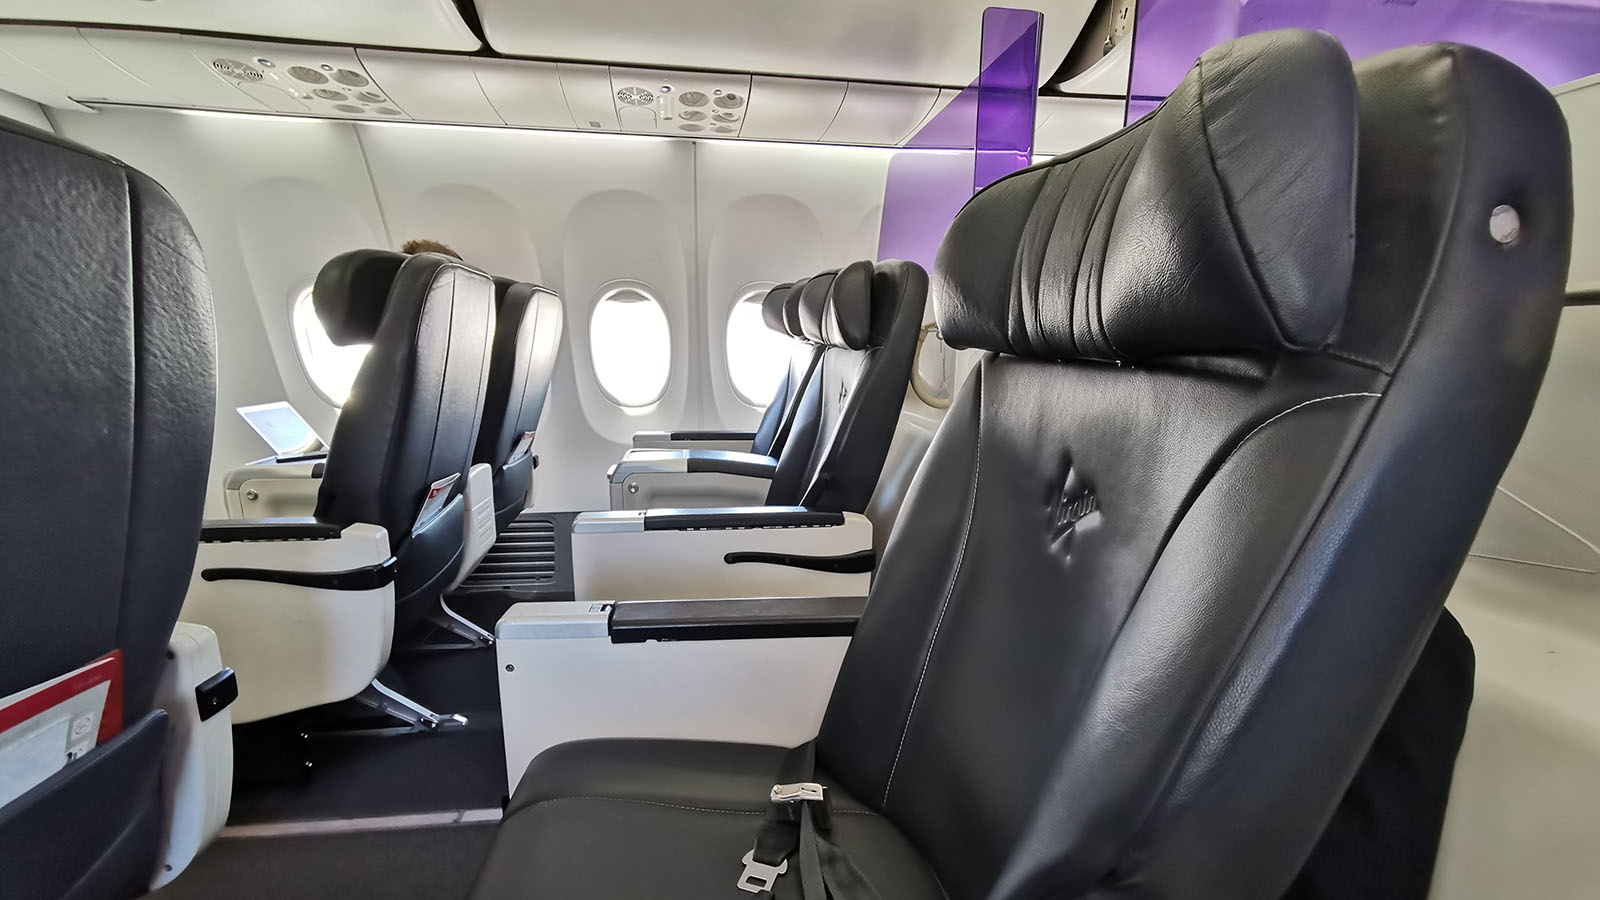 Row 2 in Virgin Australia's Boeing 737 Business Class cabin